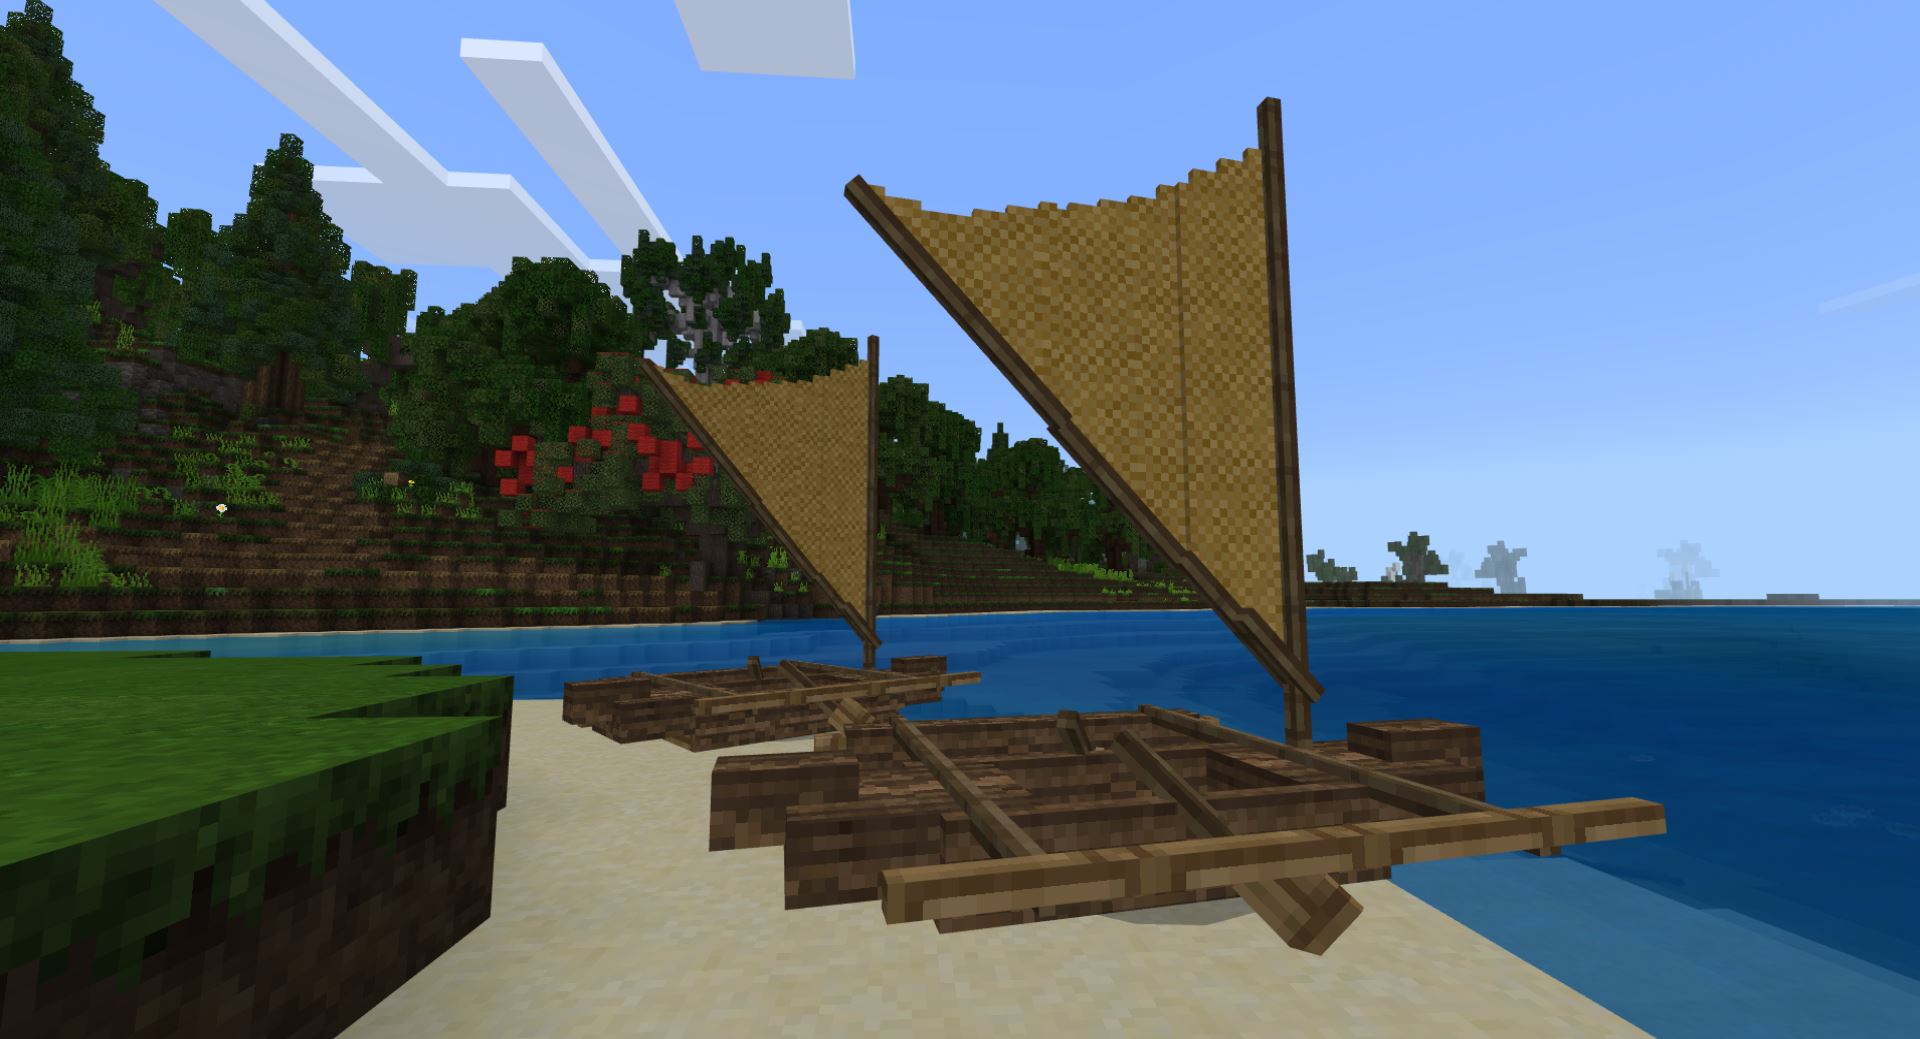 Waka (Māori watercraft/canoe) built from Minecraft blocks